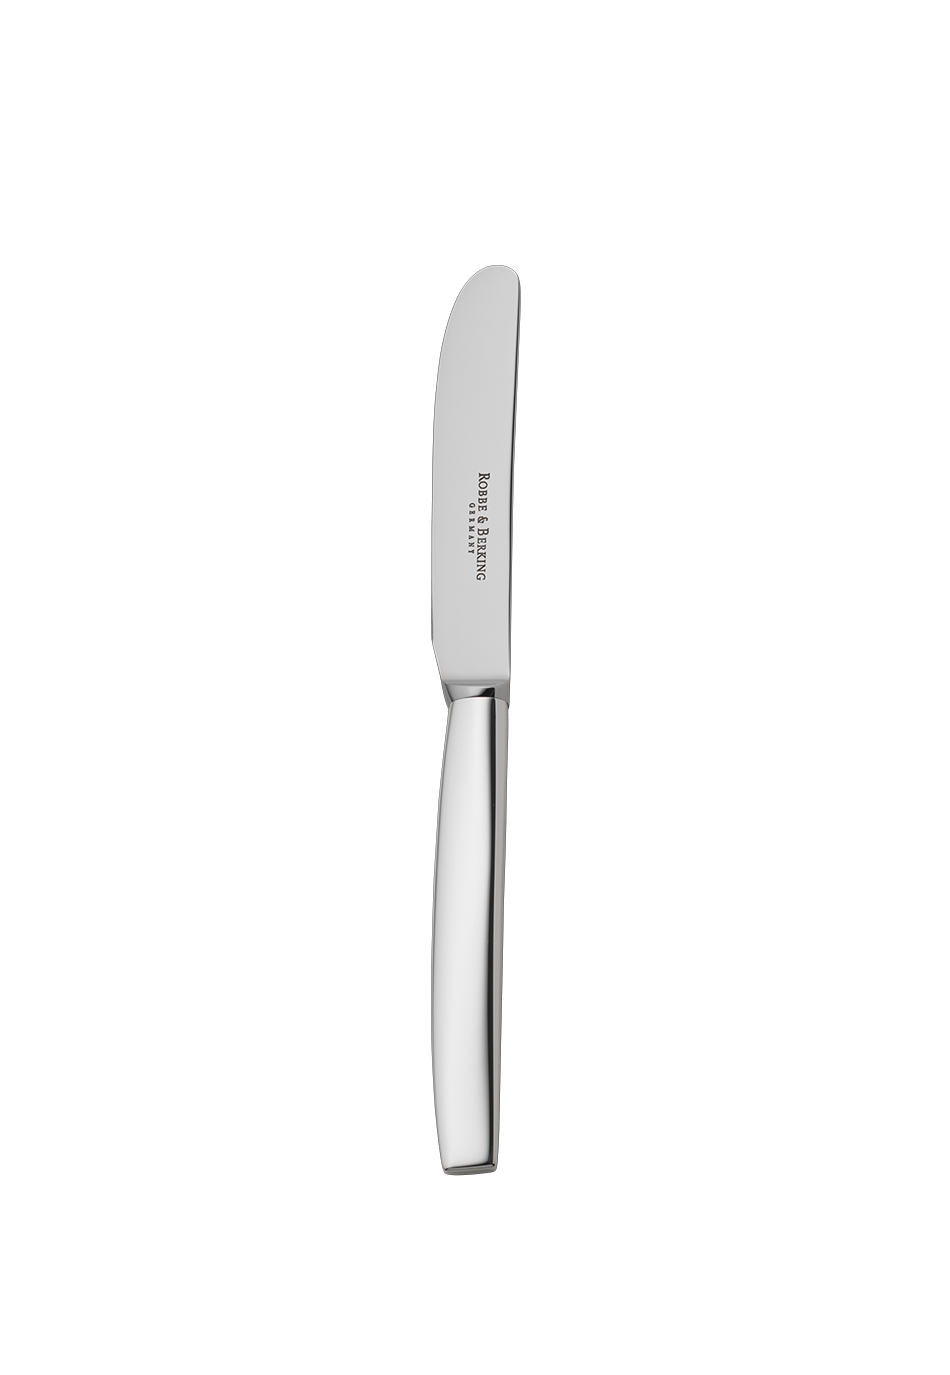 12" Cake Knife / Fruit Knife (925 Sterling Silver)